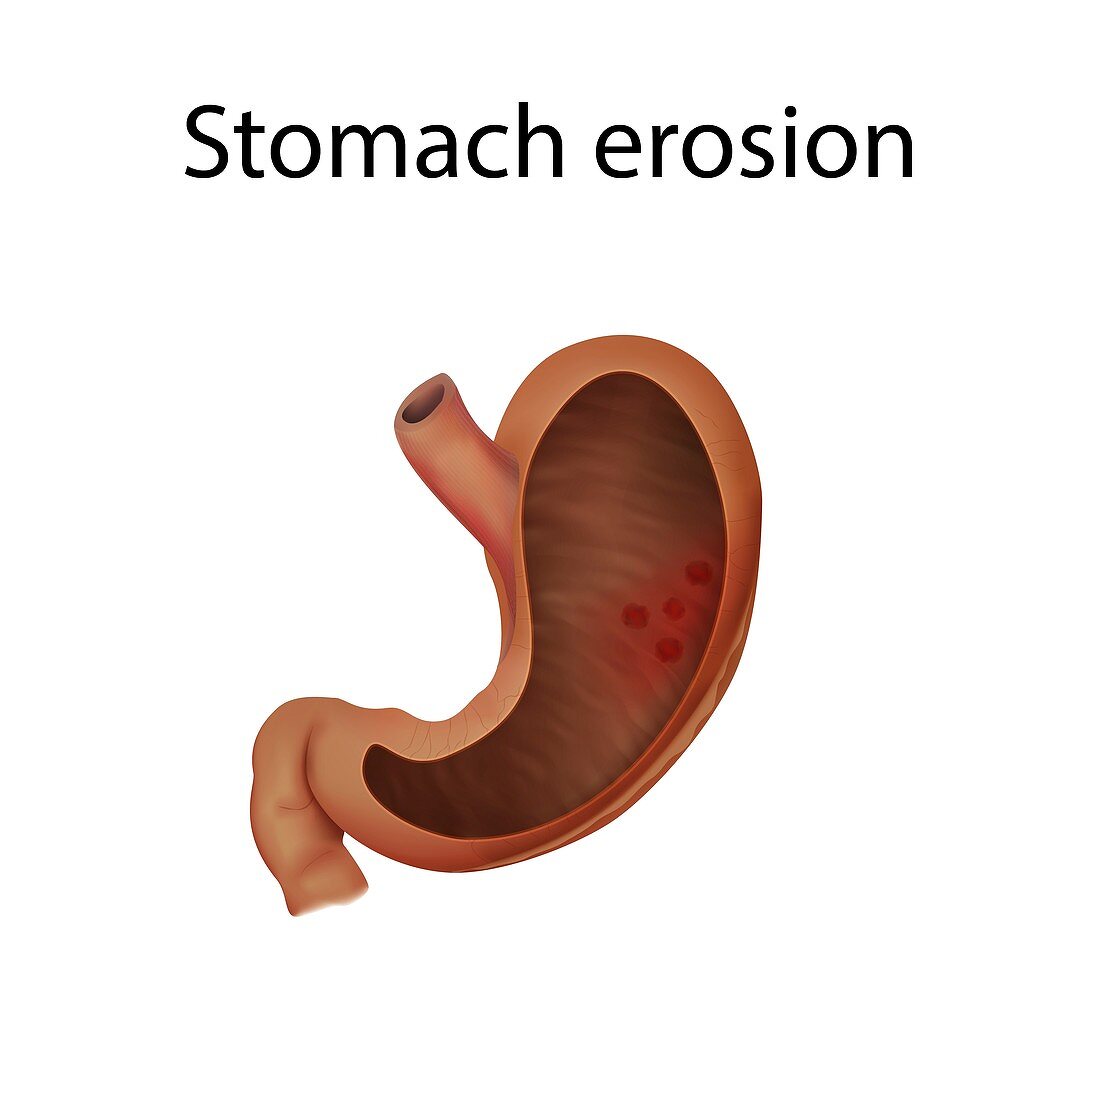 Stomach erosion, illustration